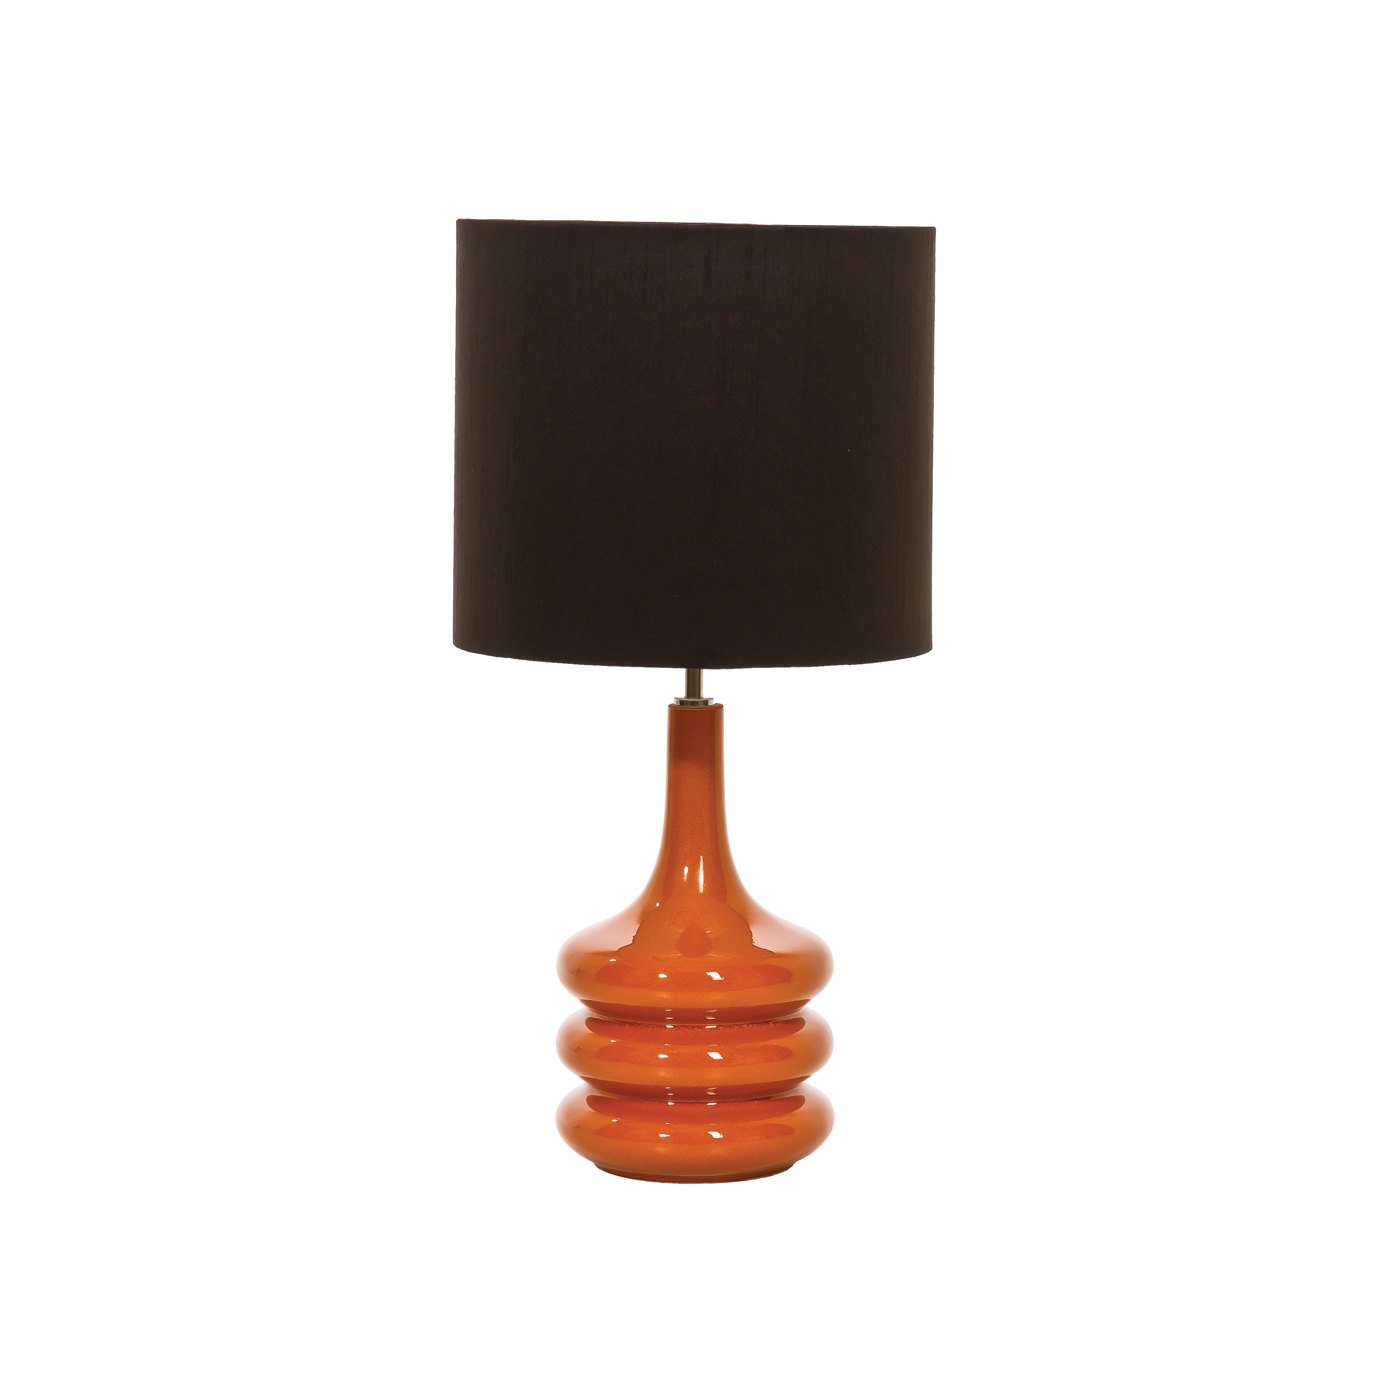 Harlequin Contour Table Lamp, Harlequin Ceramic Table Lamp